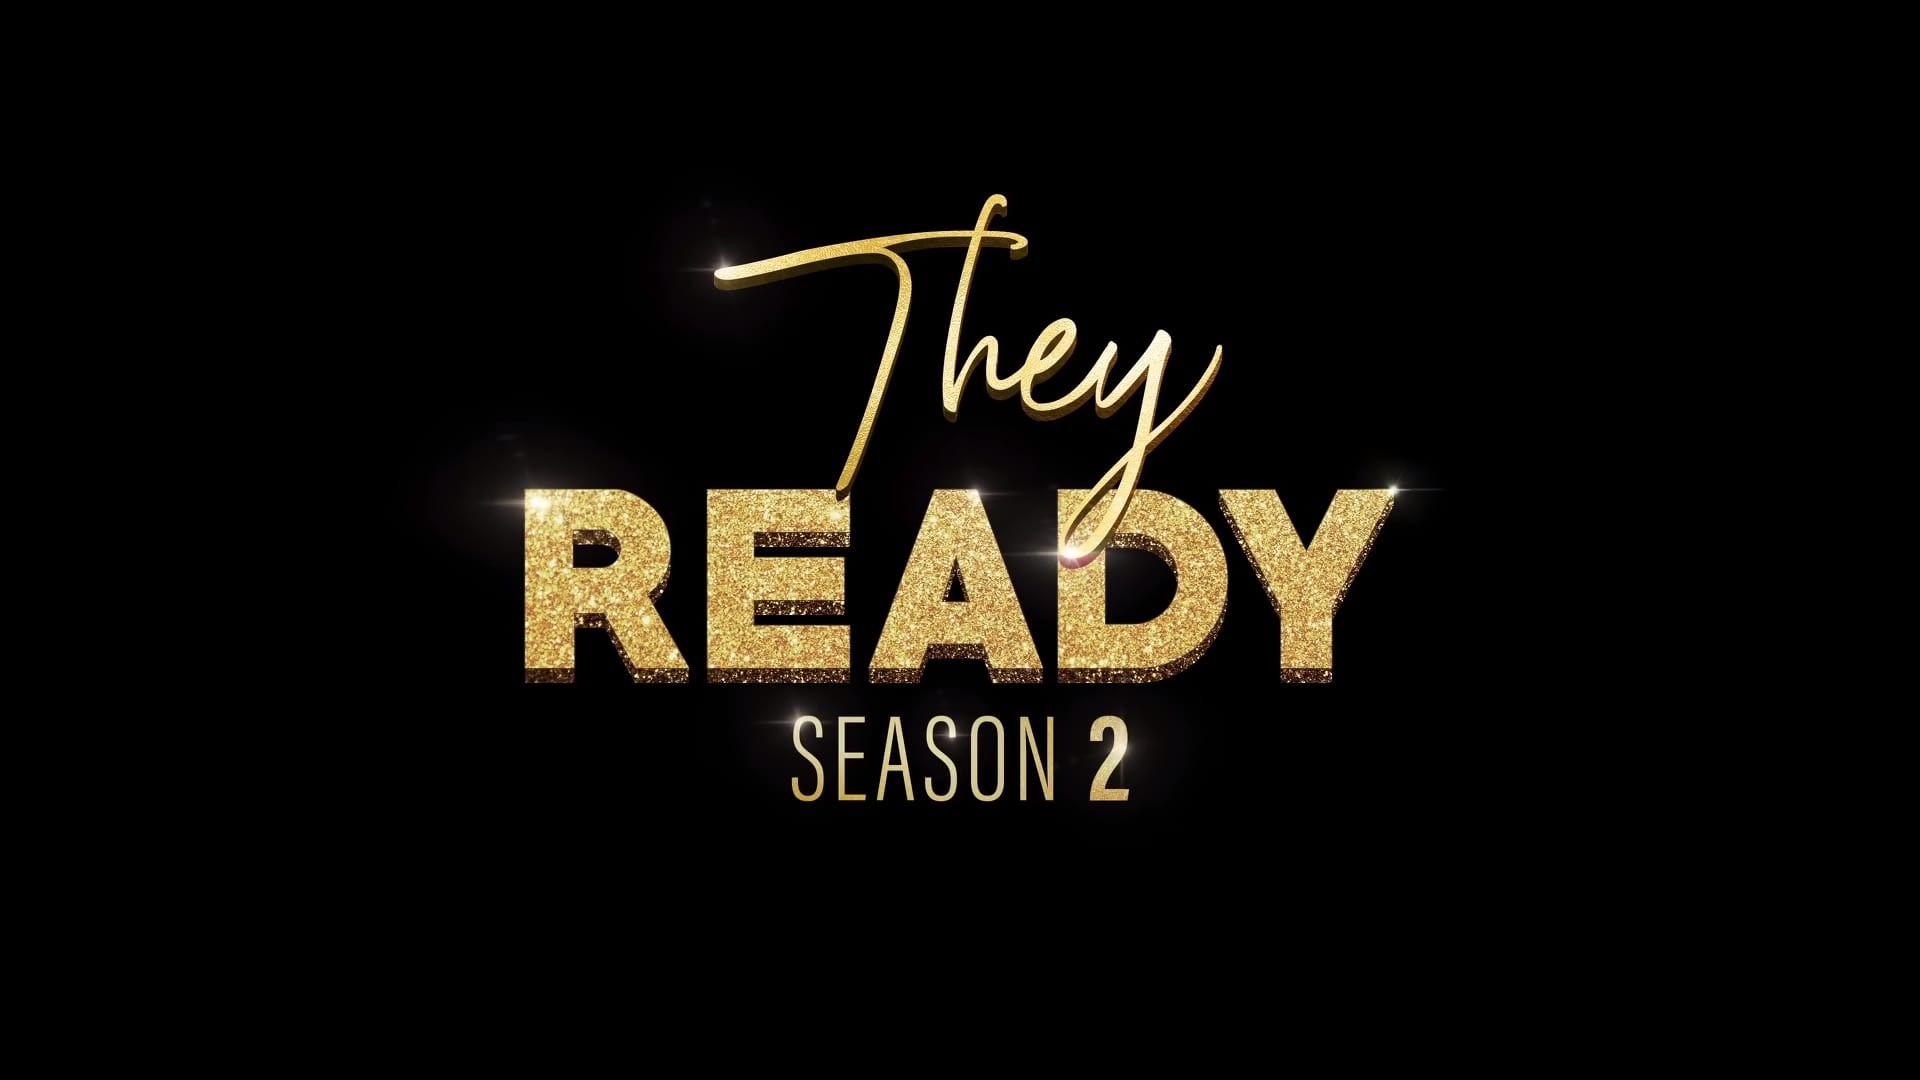 Netflix Tiffany Haddish Presents They Ready Season 2 Trailer, Netflix Standup Comedy, Netflix Comedy Shows, Coming to Netflix in February 2021